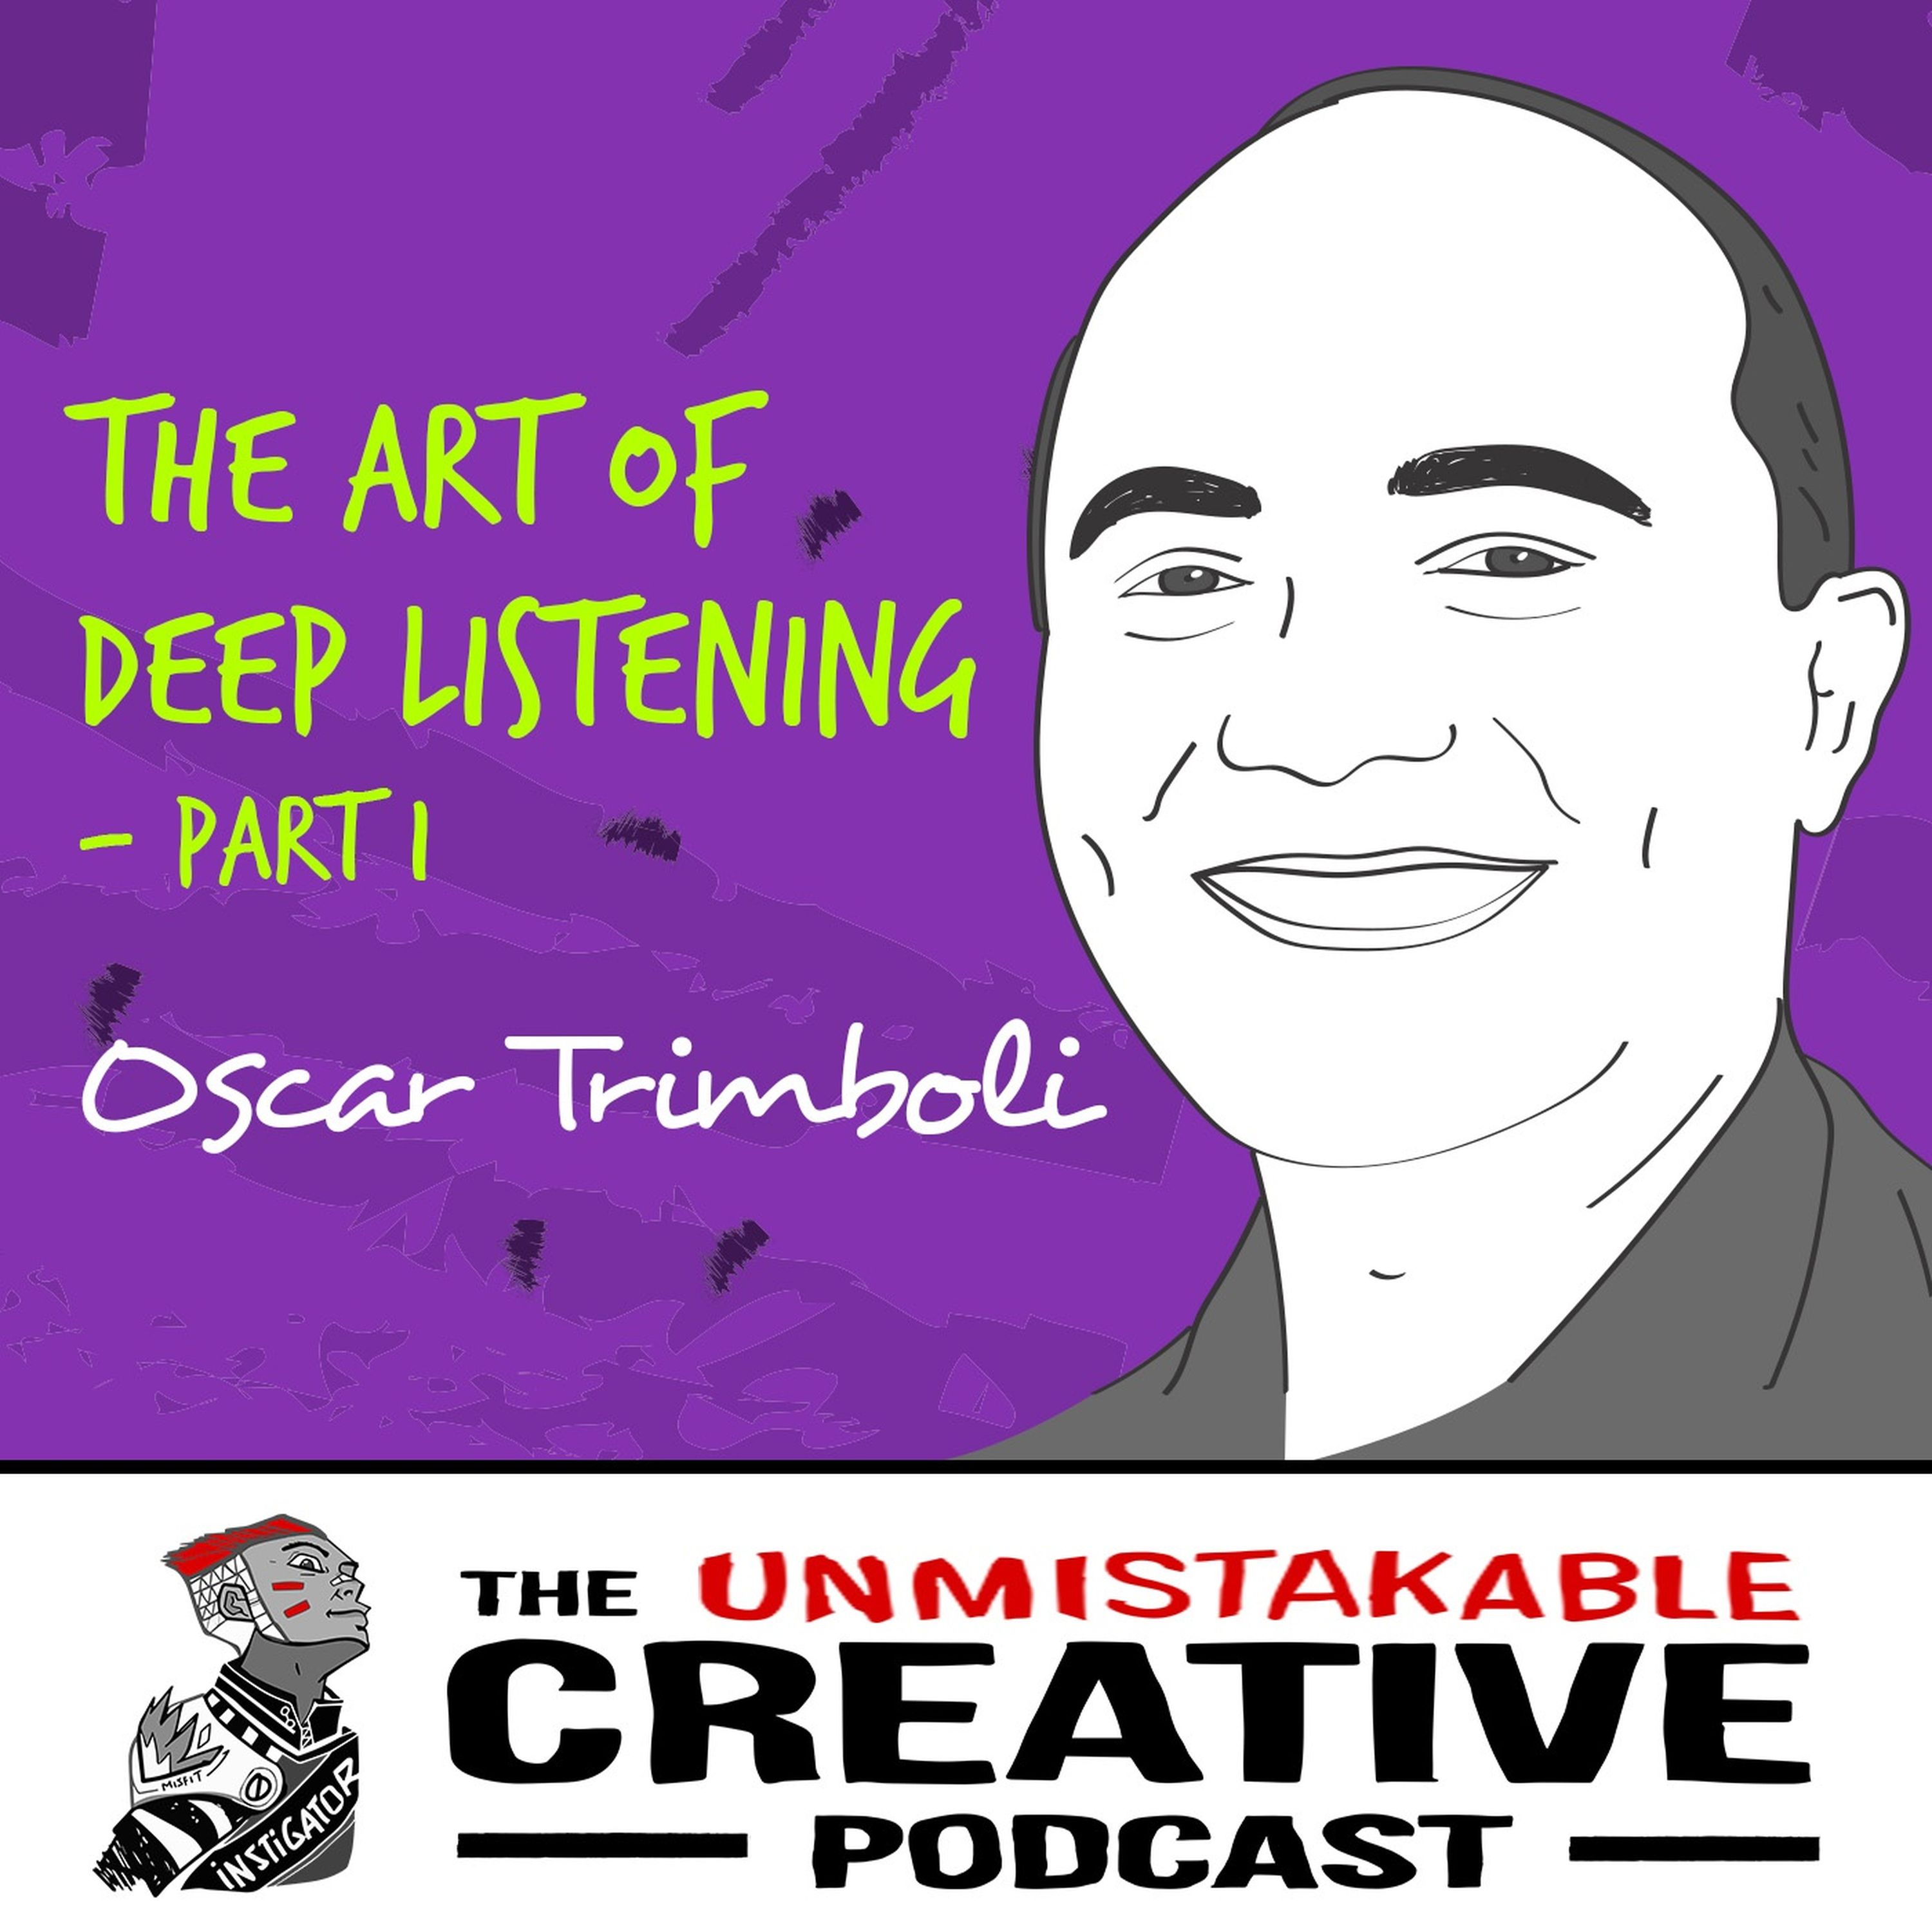 Oscar Trimboli: The Art of Deep Listening - Part 1